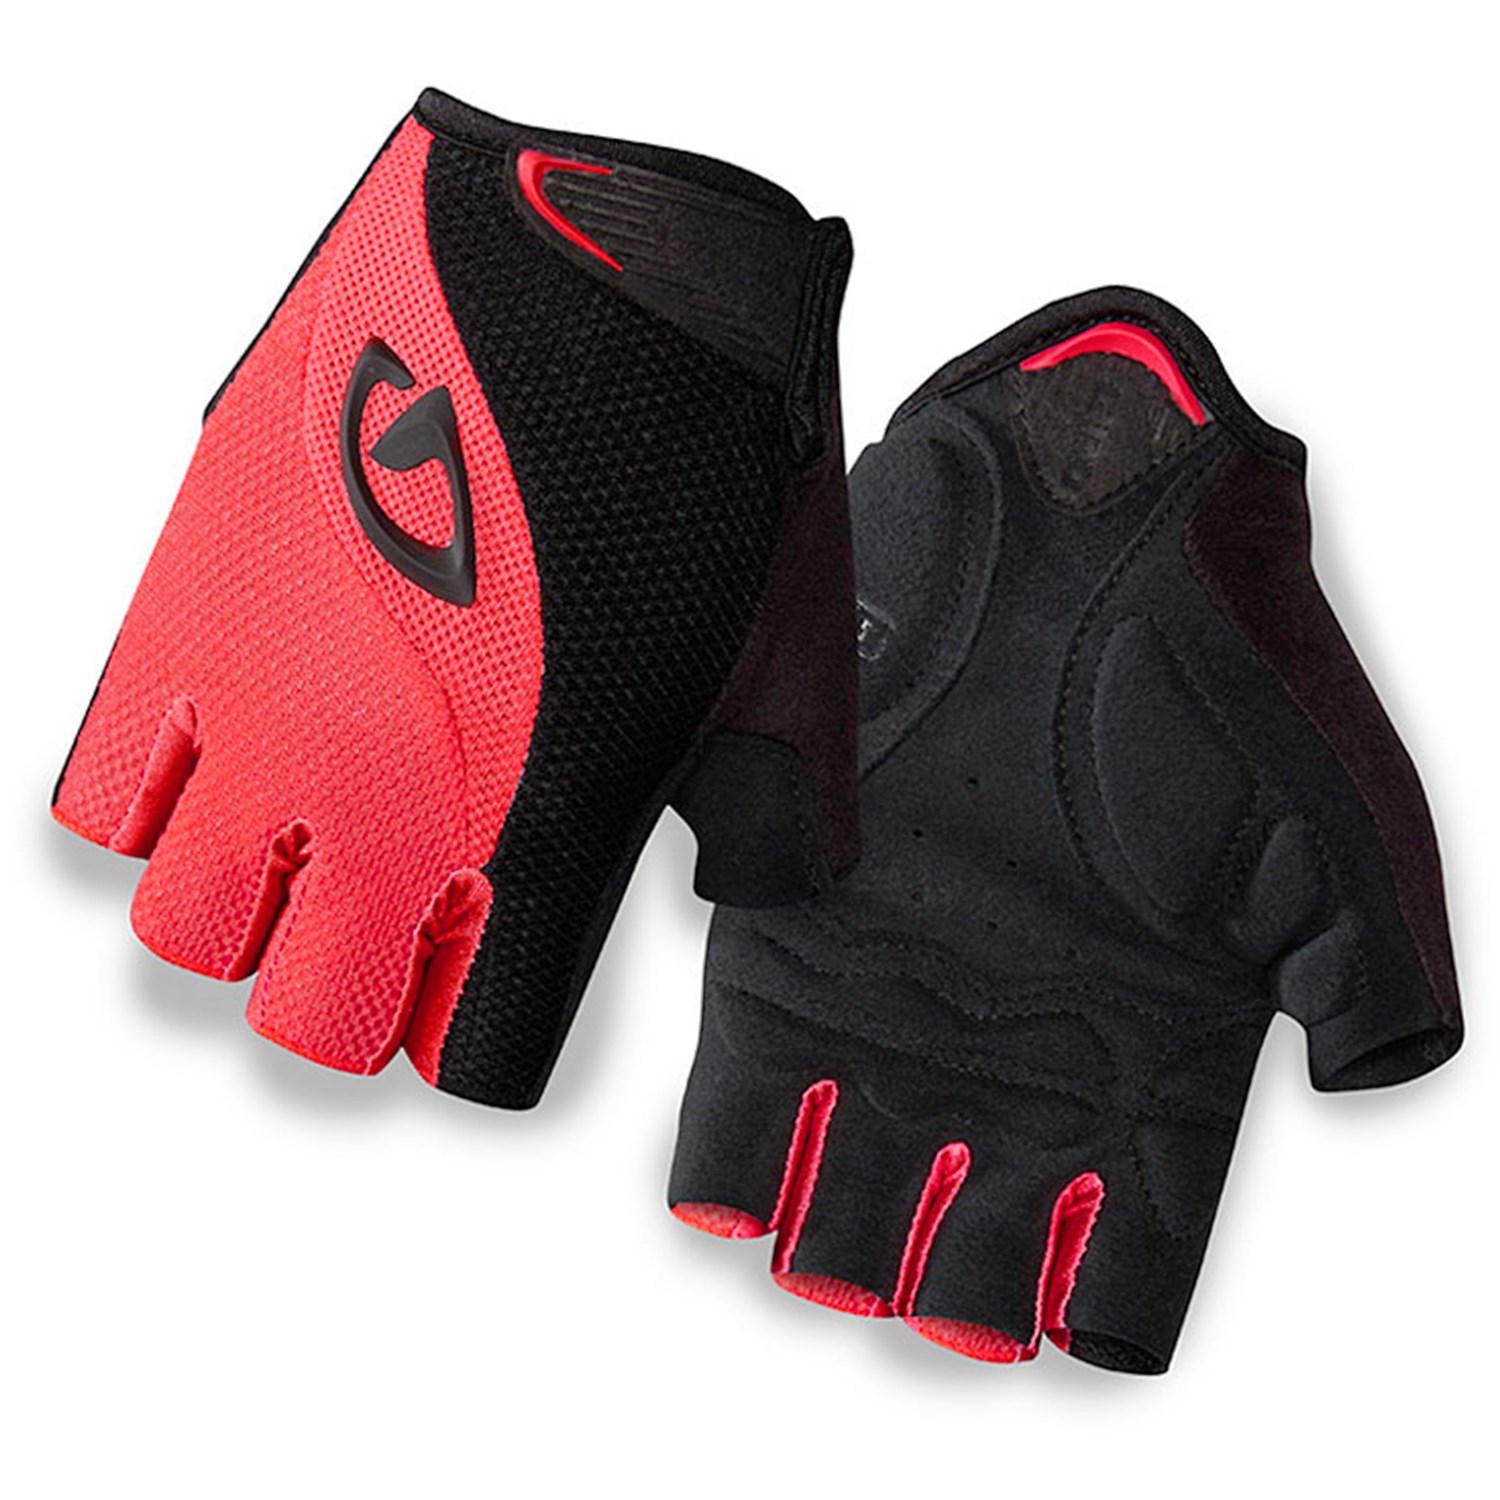 Giro Tessa Bike Gloves (For Women) - Save 42%